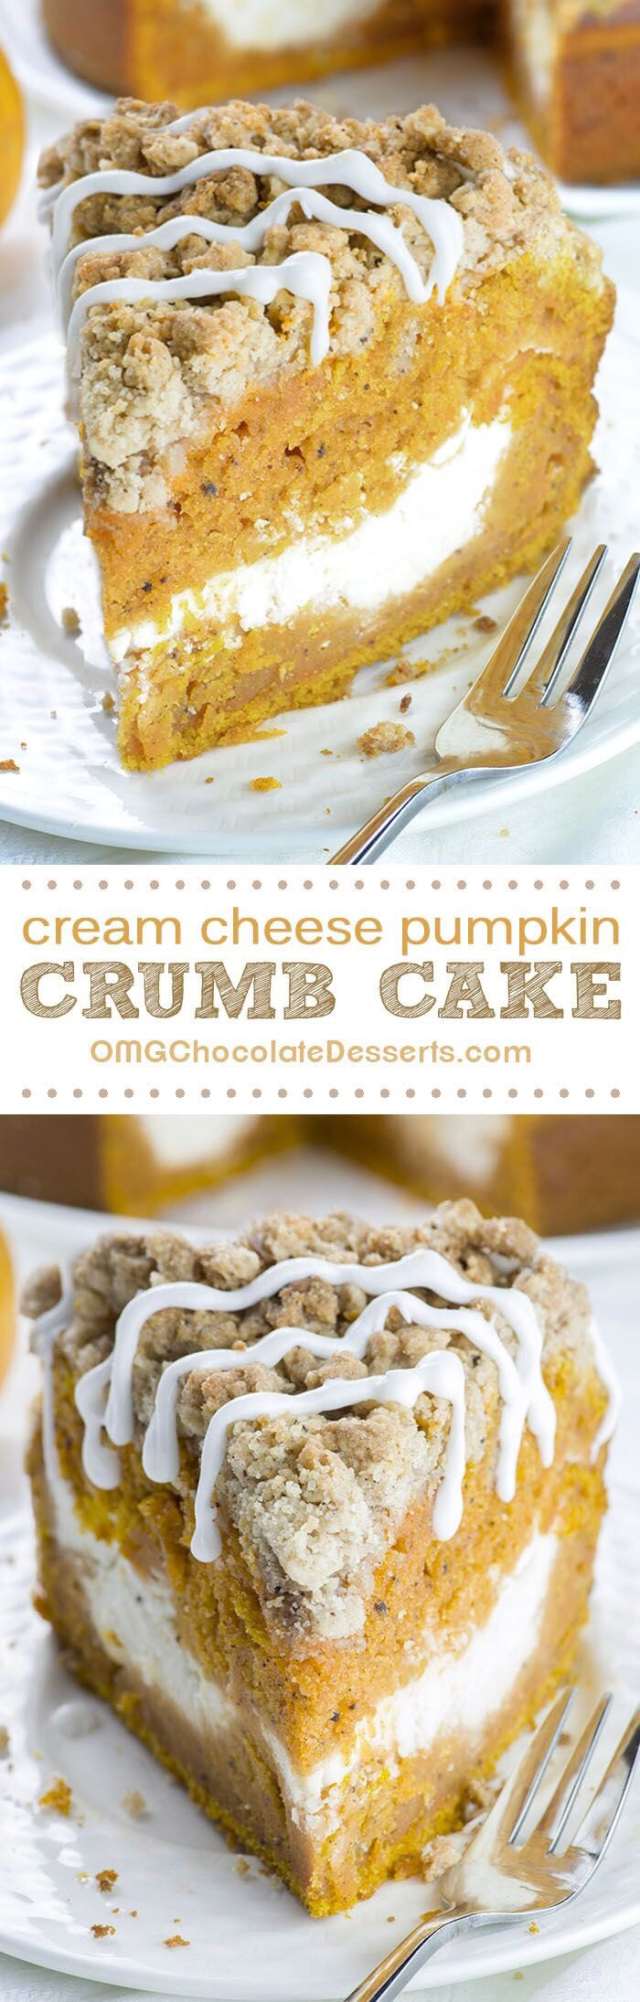 Pumpkin Spice Recipes: Cream Cheese Pumpkin Crumb Cake